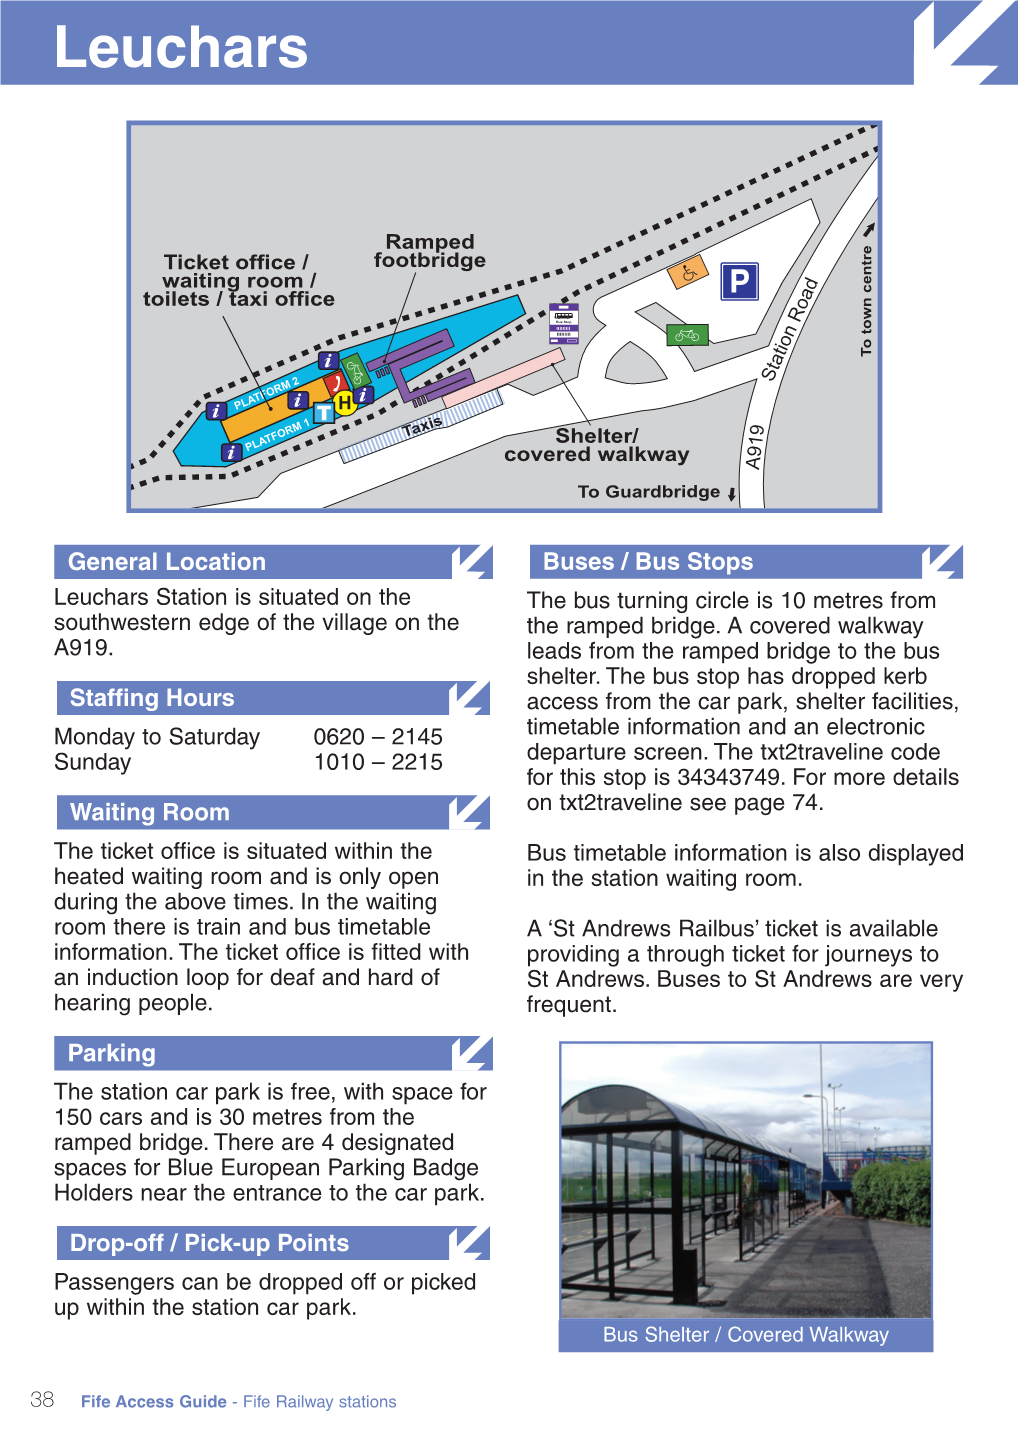 Leuchars Train Station Access Guide